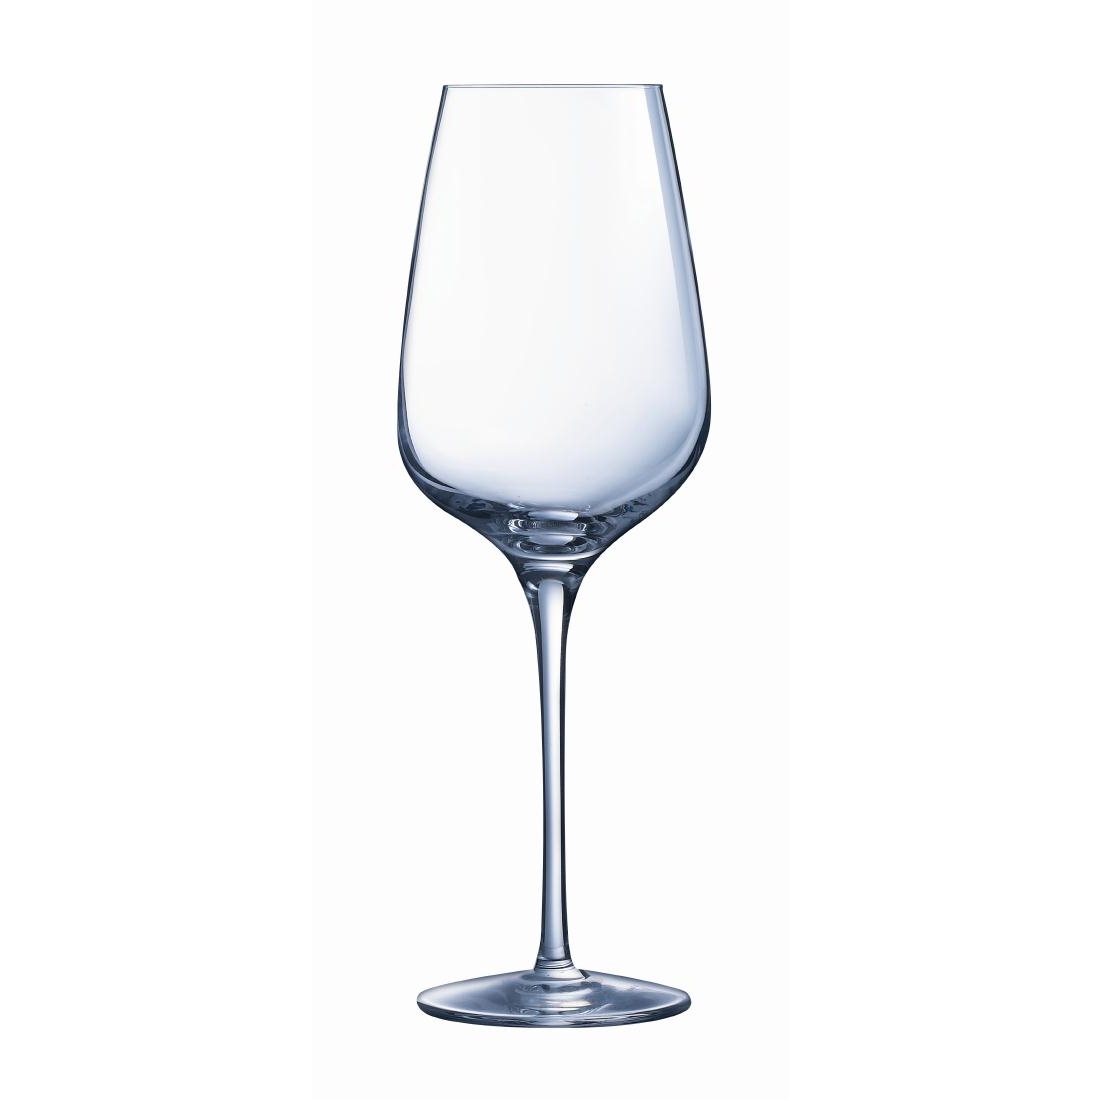 Chef & Sommelier Grand Sublym Wine Glass 15oz